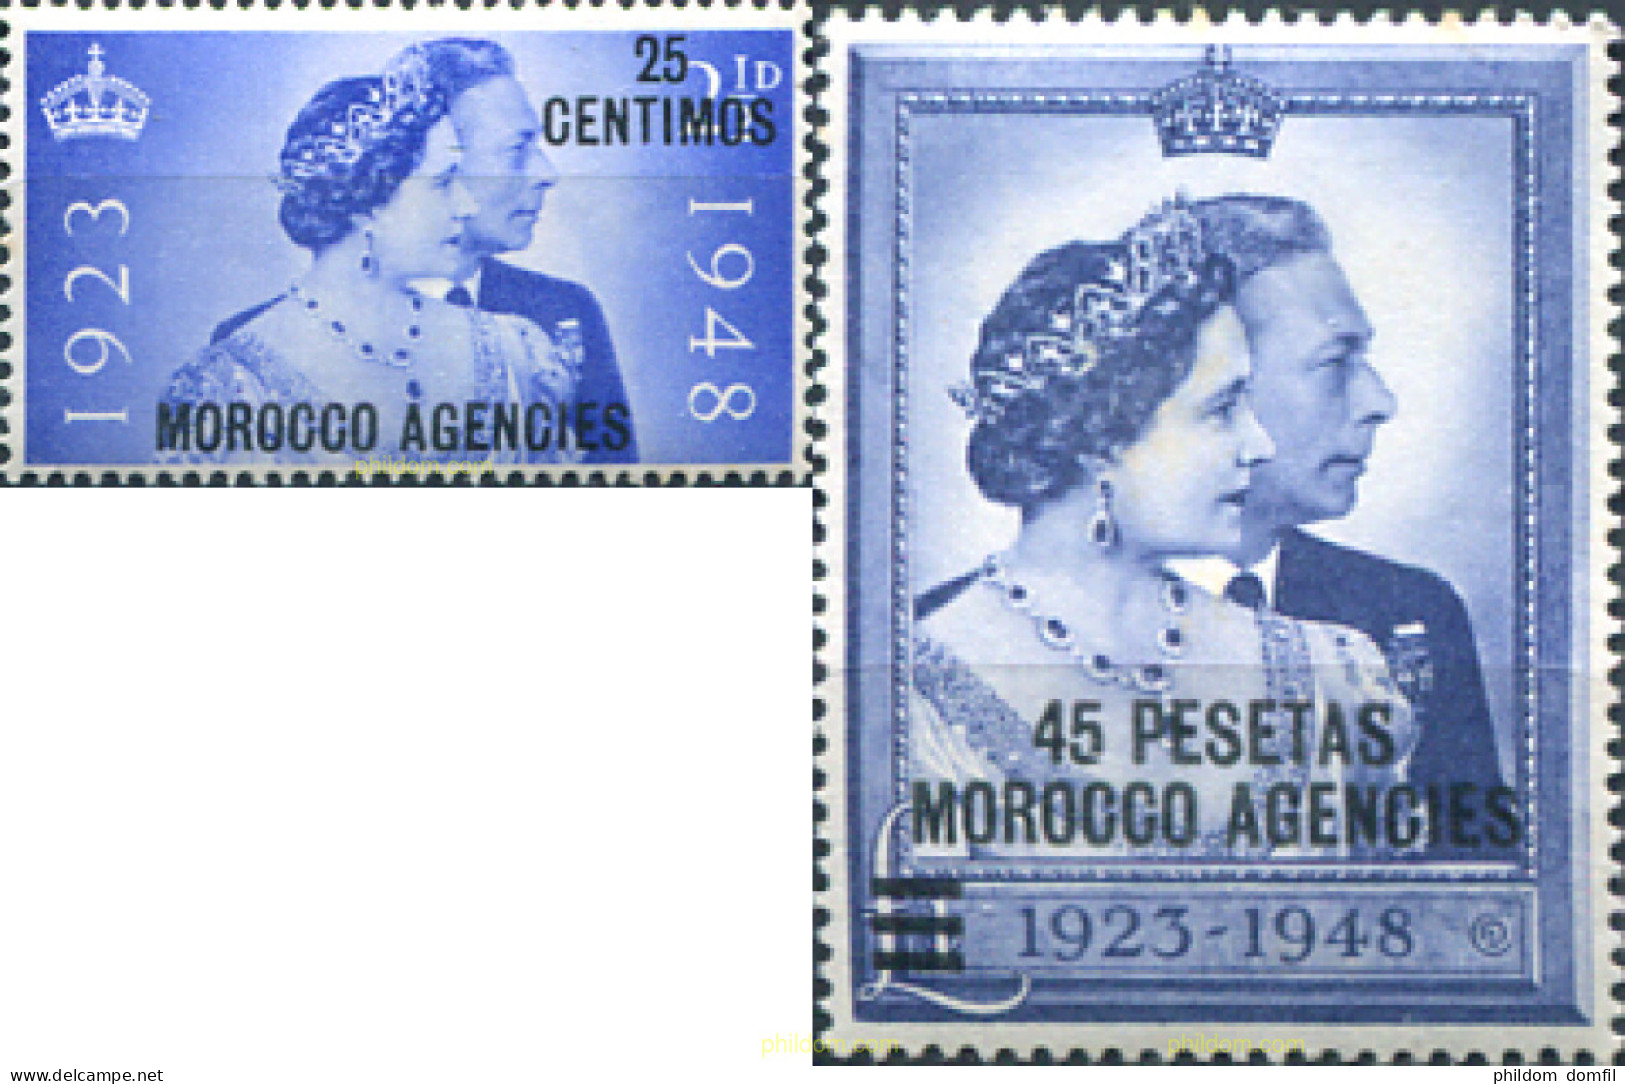 343026 MNH MARRUECOS Oficina Inglesa 1948 REYES - Morocco Agencies / Tangier (...-1958)